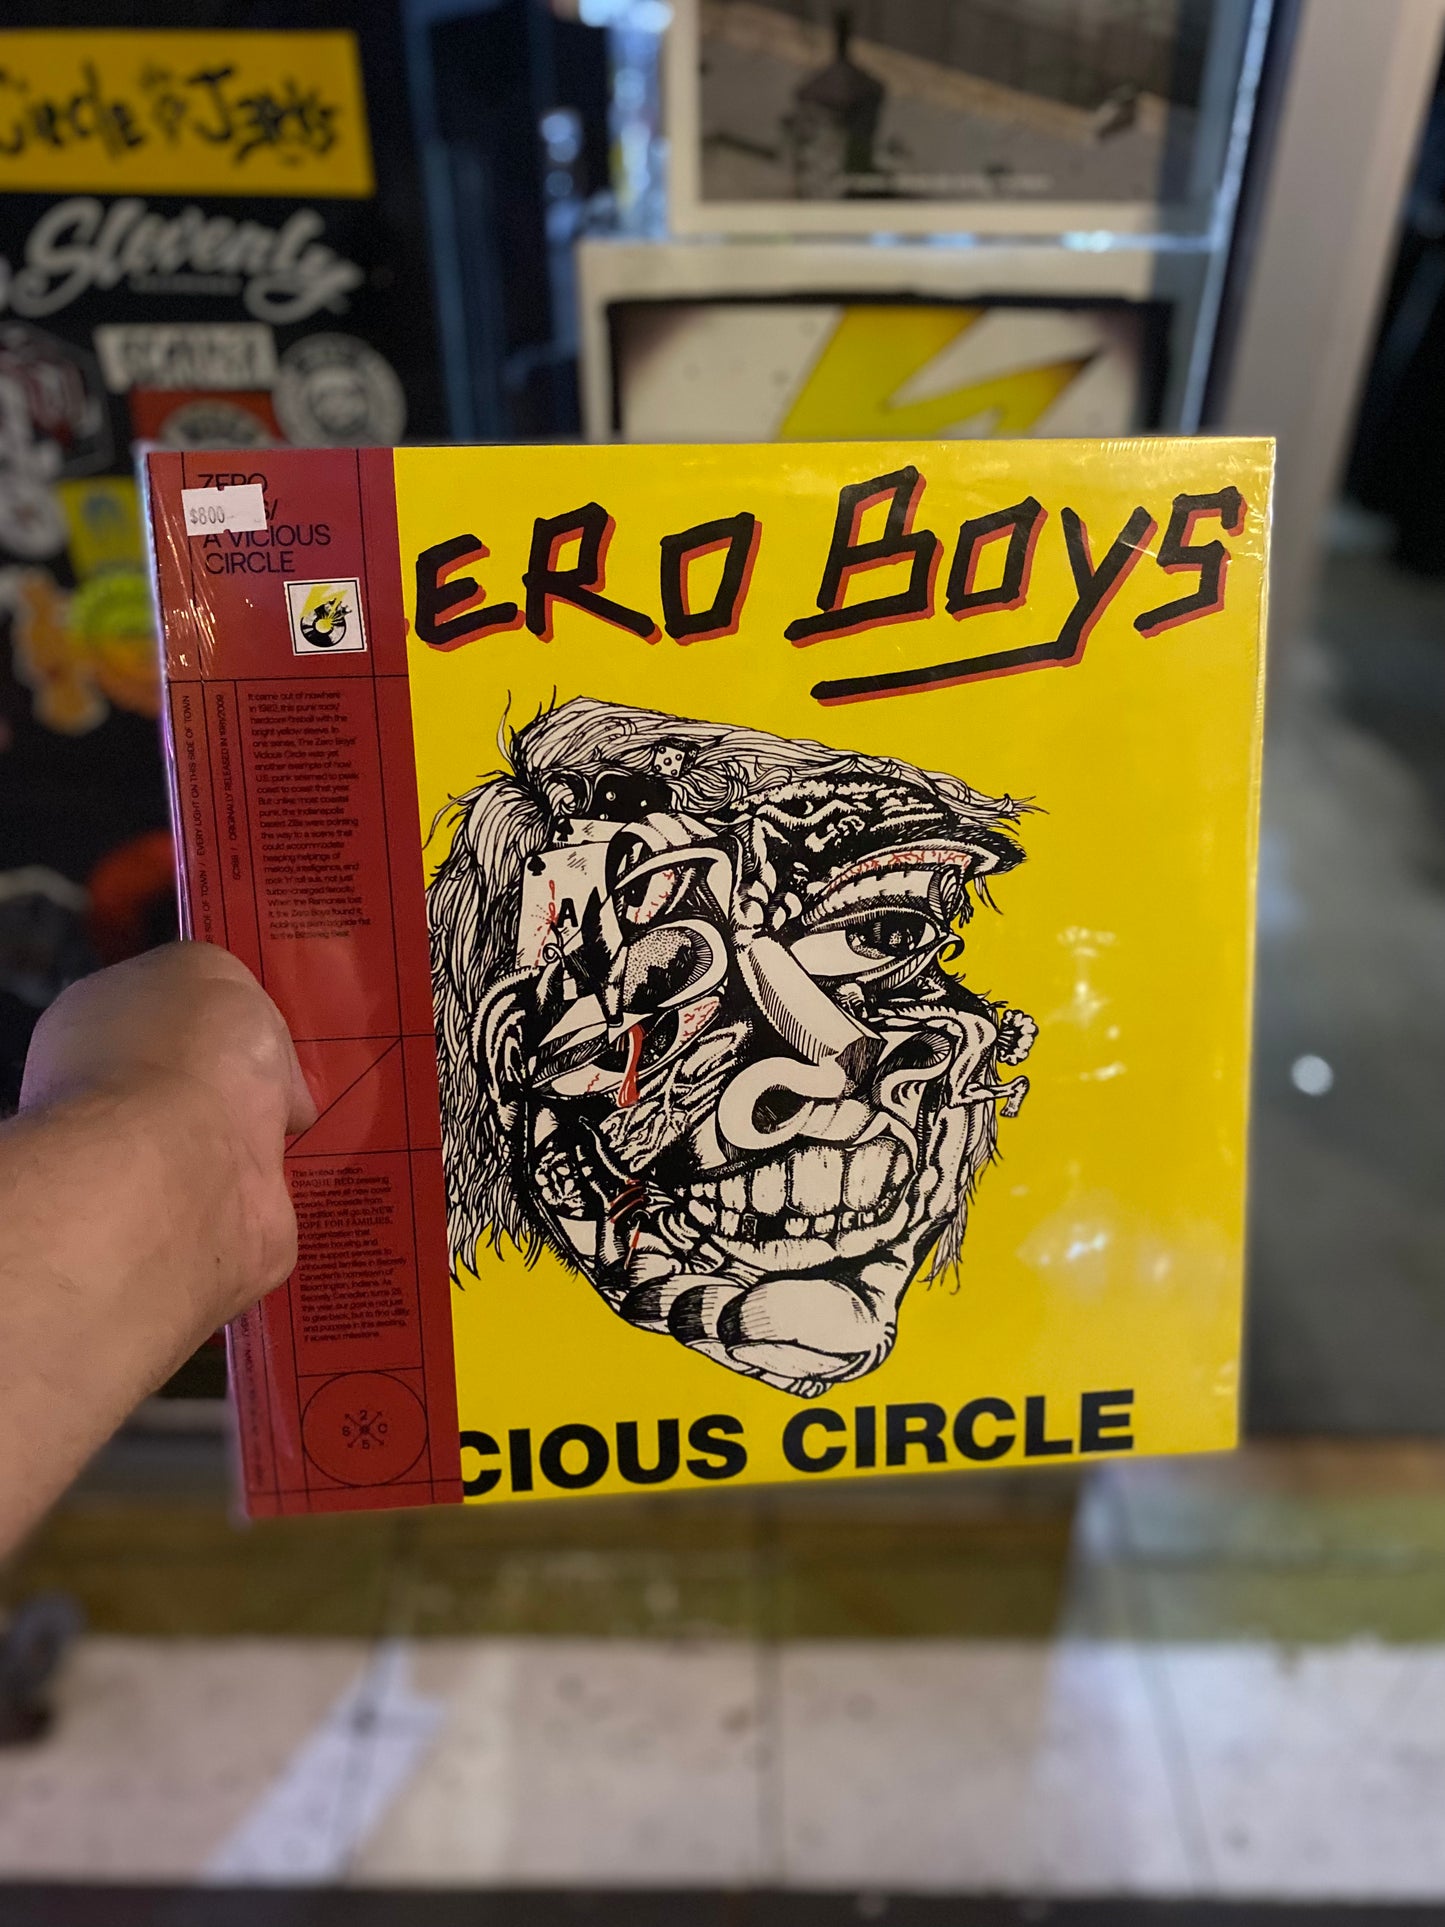 Zero Boys - Vicious Circle (red)